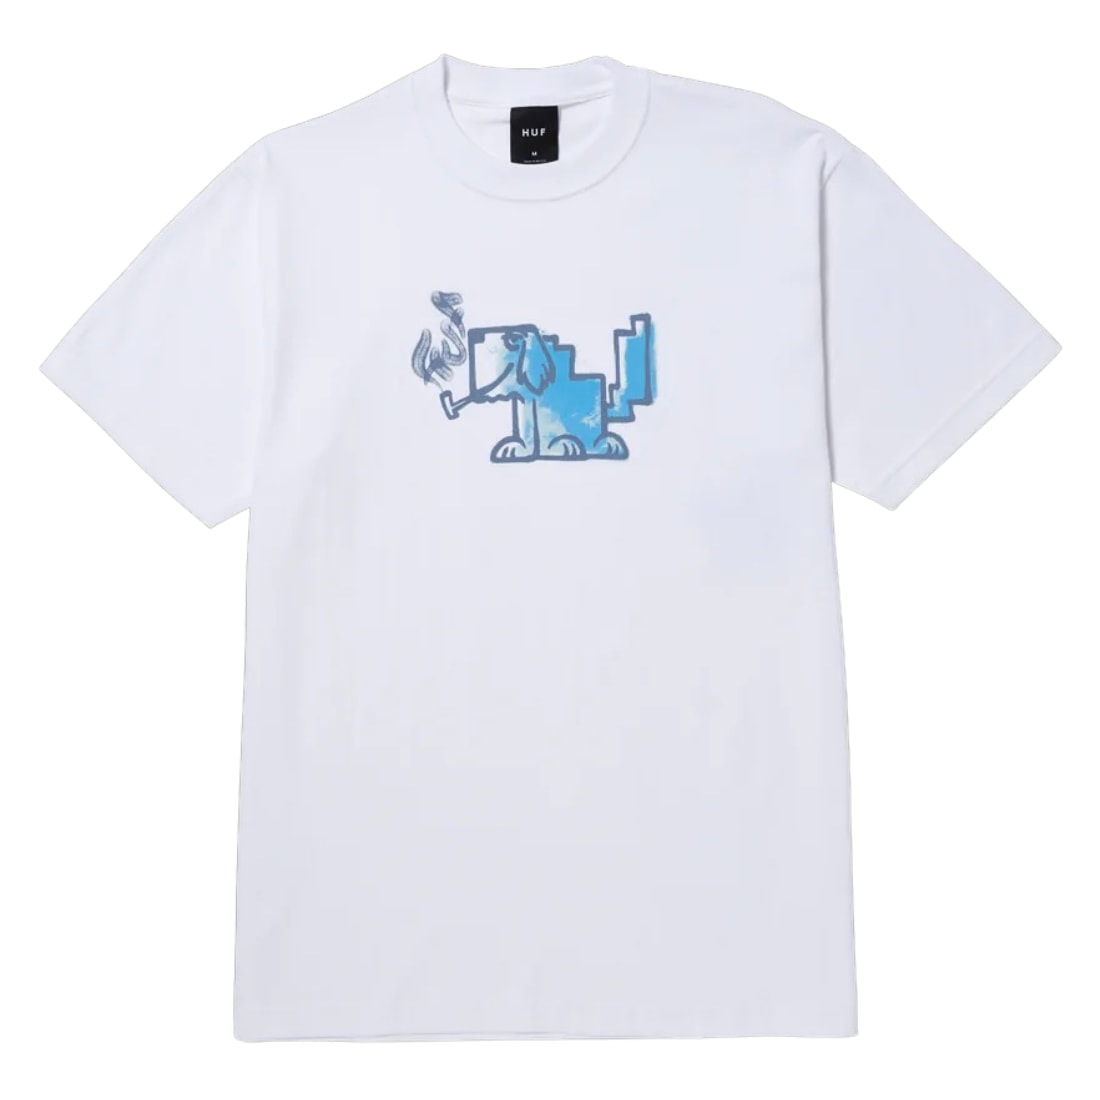 Huf Mod Dog T-Shirt - White - Mens Graphic T-Shirt by Huf